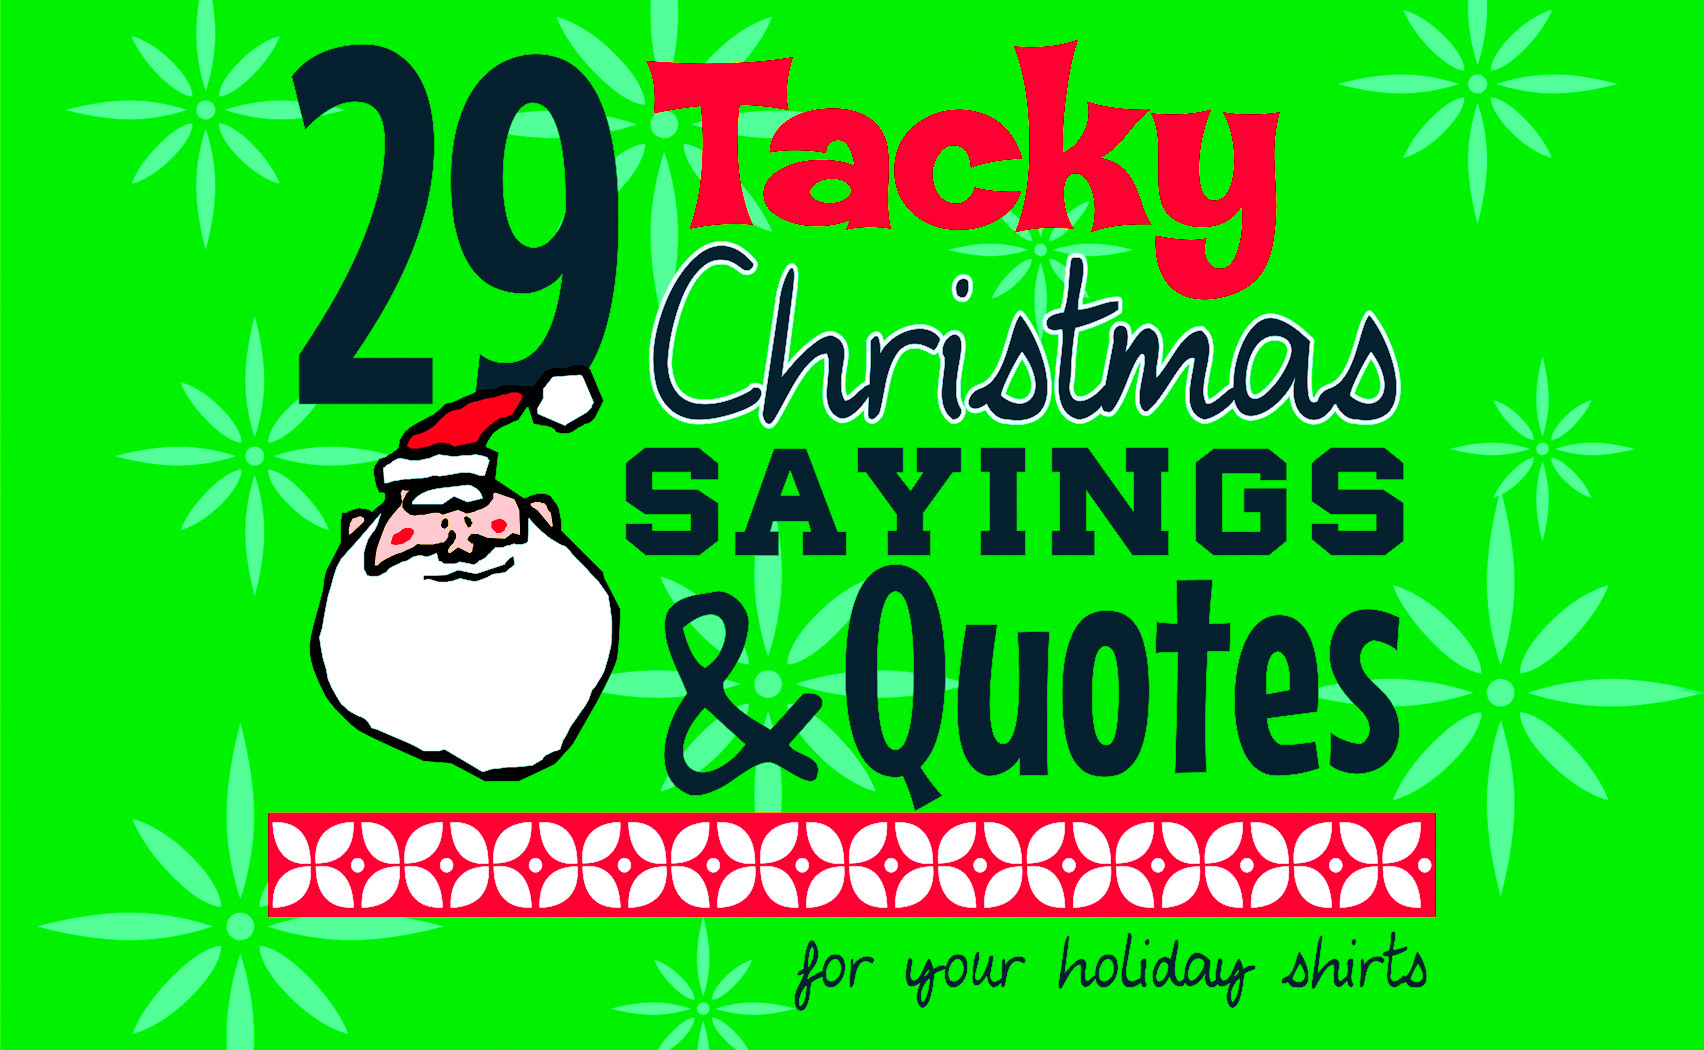 Christmas Holiday Quotes
 IZA Design Blog Tacky Christmas Sayings and Quotes